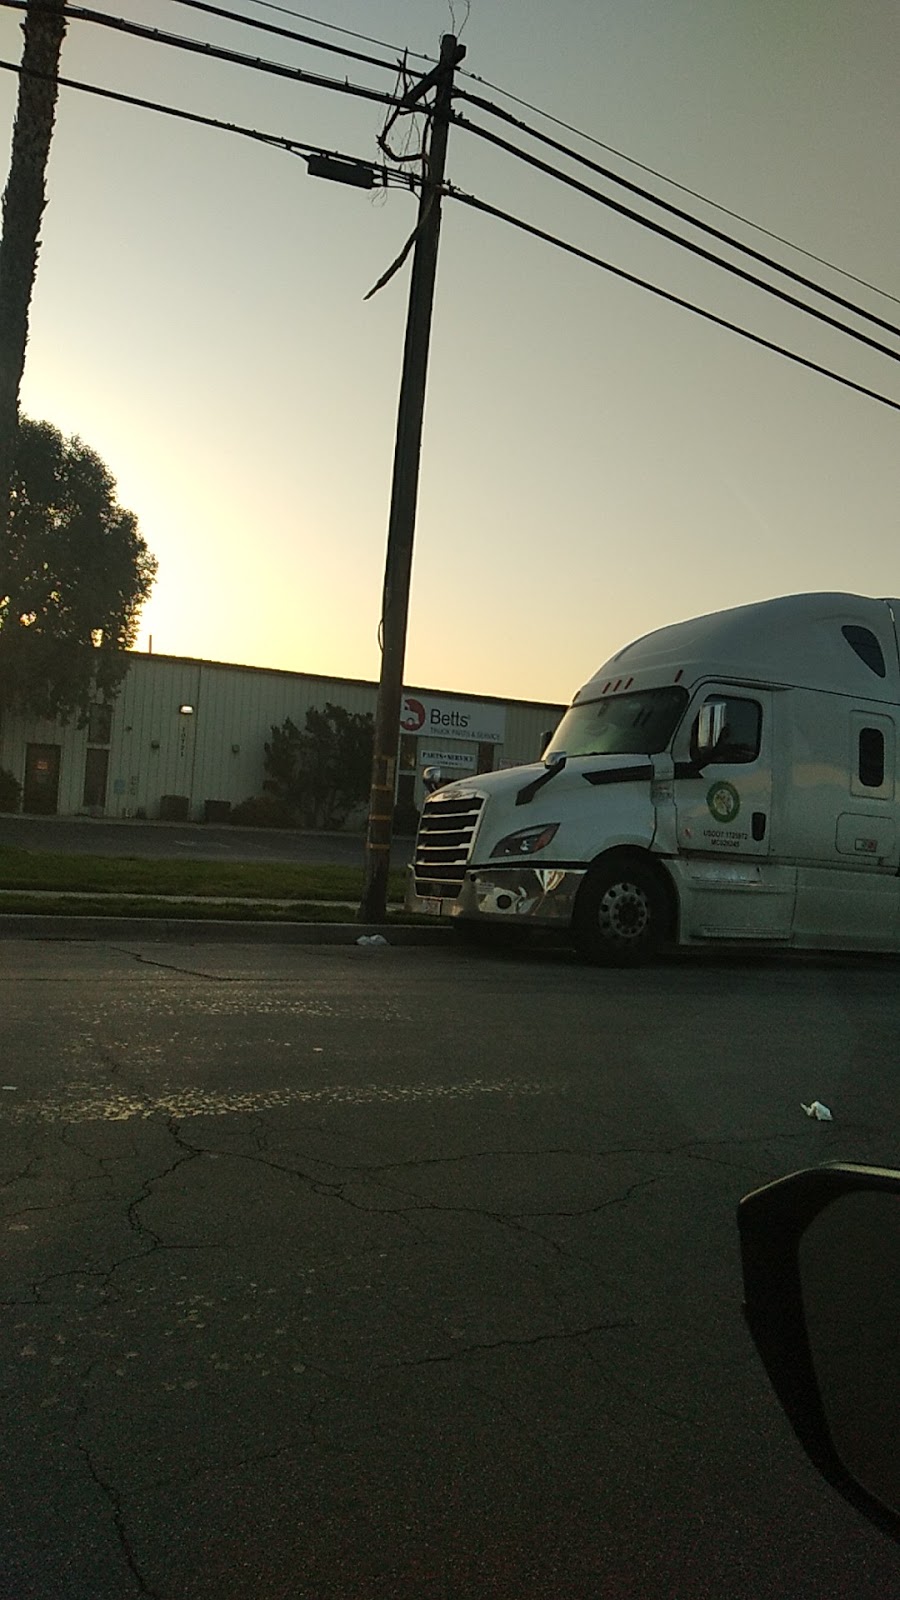 Betts Truck Parts & Service | 10771 Almond Ave, Fontana, CA 92337, USA | Phone: (909) 427-9988